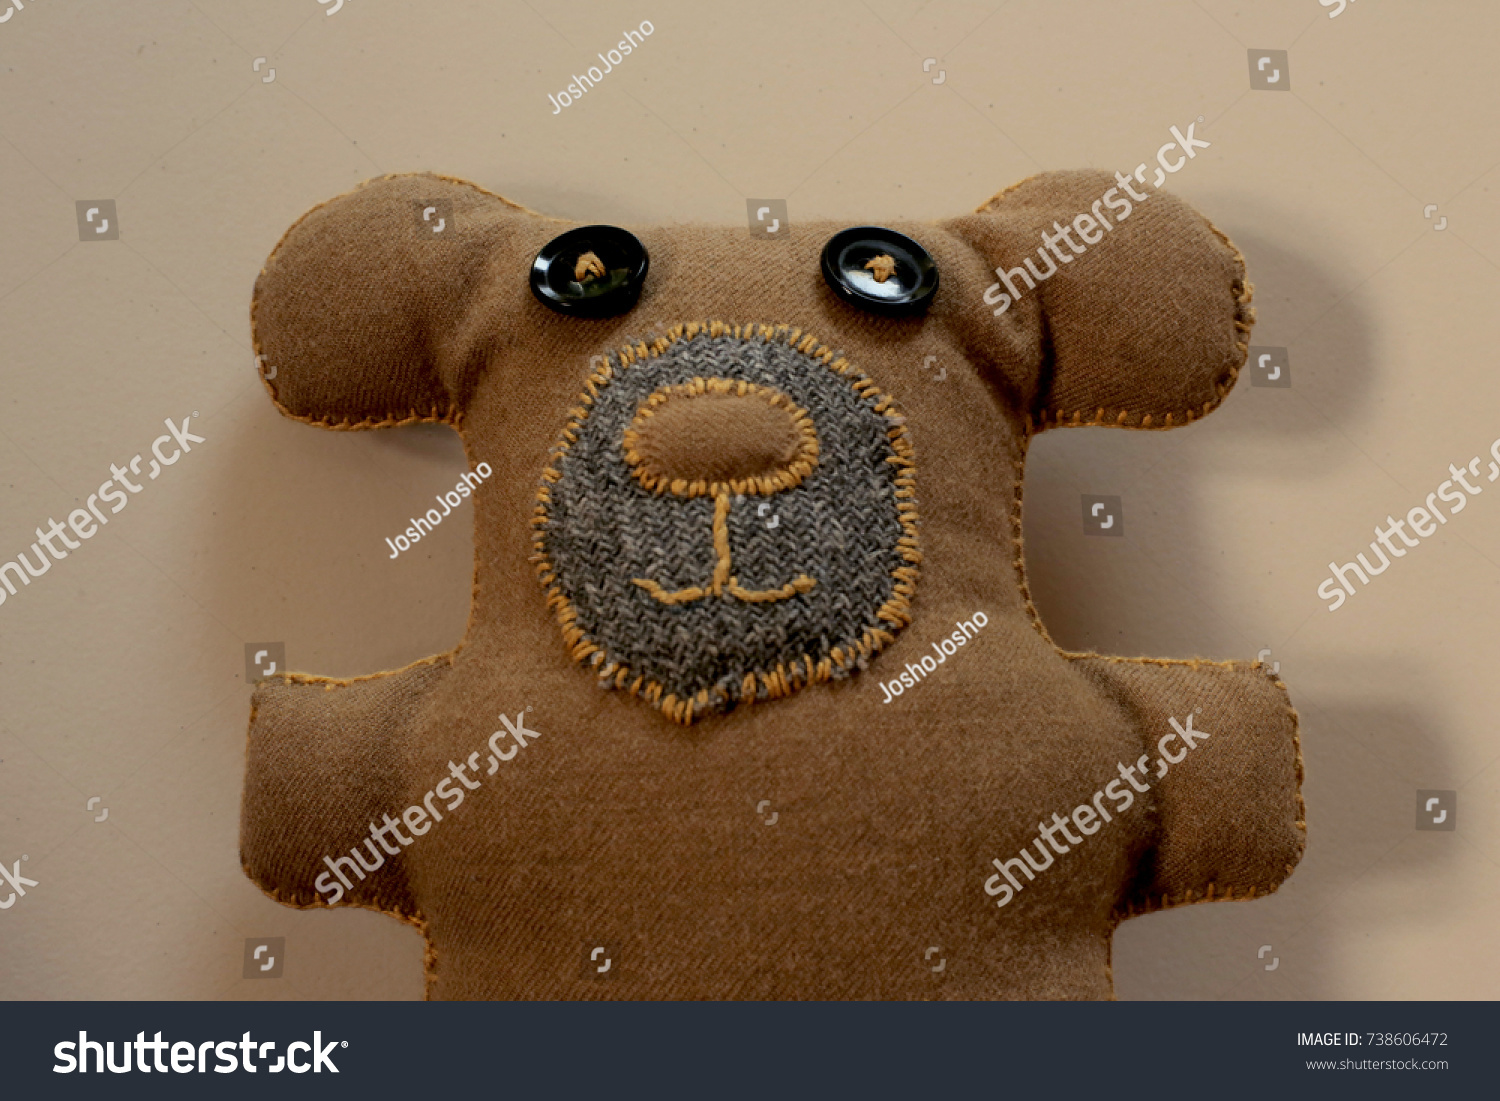 teddy bear with button eyes